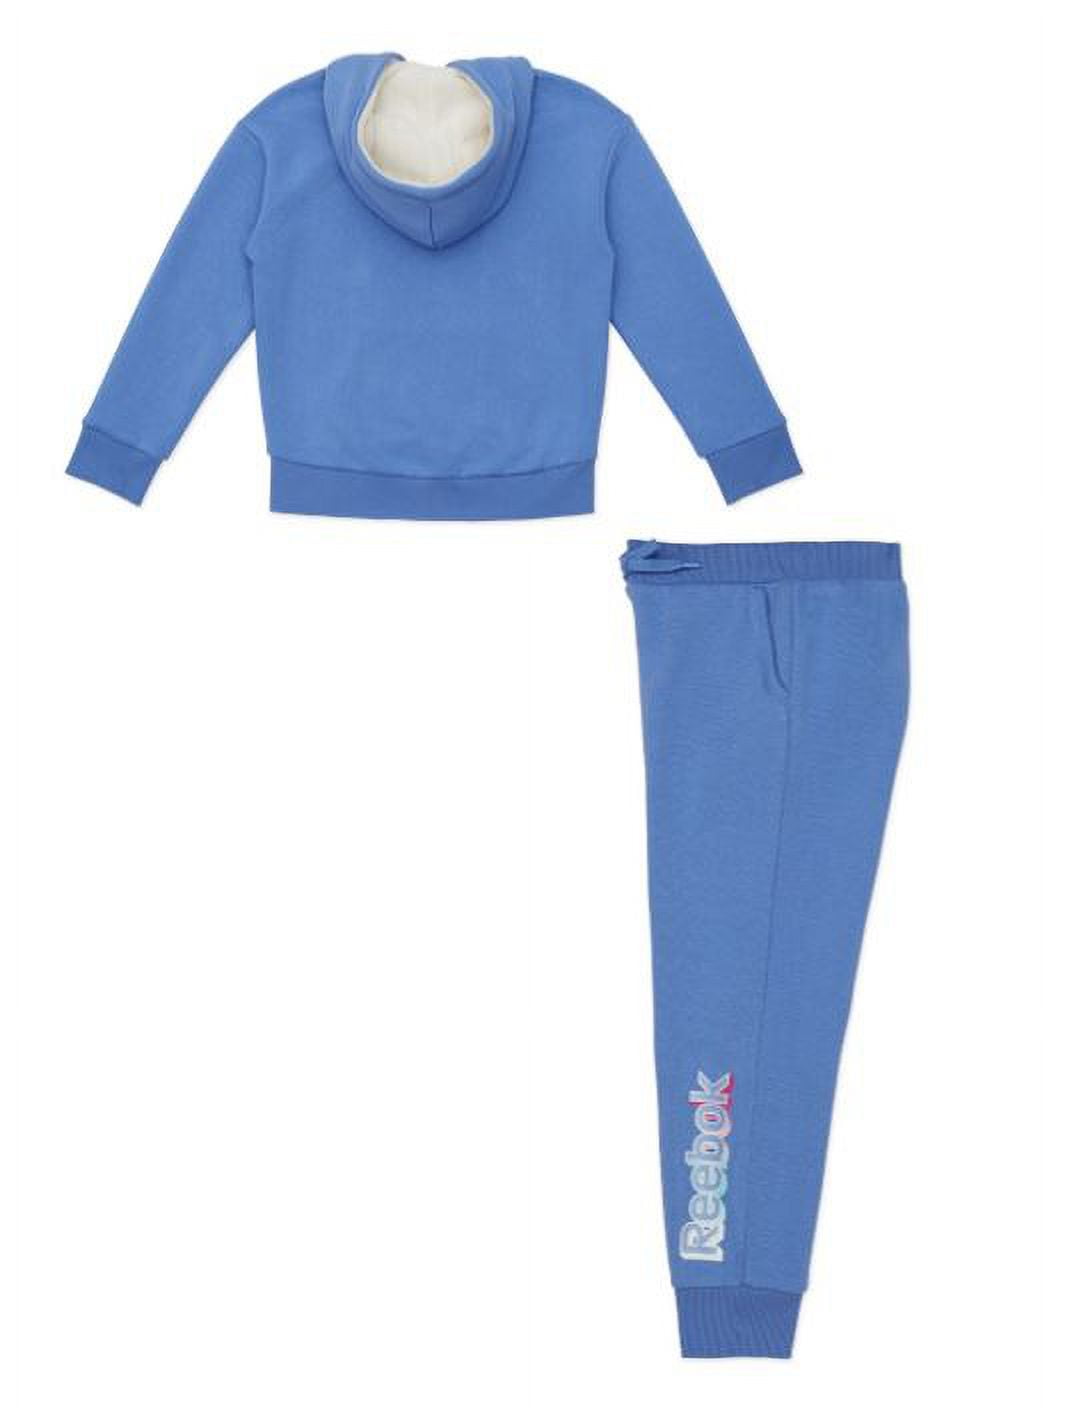  Reebok Girls' Sweatsuit Set - 2 Piece Fleece Hoodie and Jogger  Sweatpants (Size 7-12), Size 4, Quartz PinkGrey : Clothing, Shoes & Jewelry